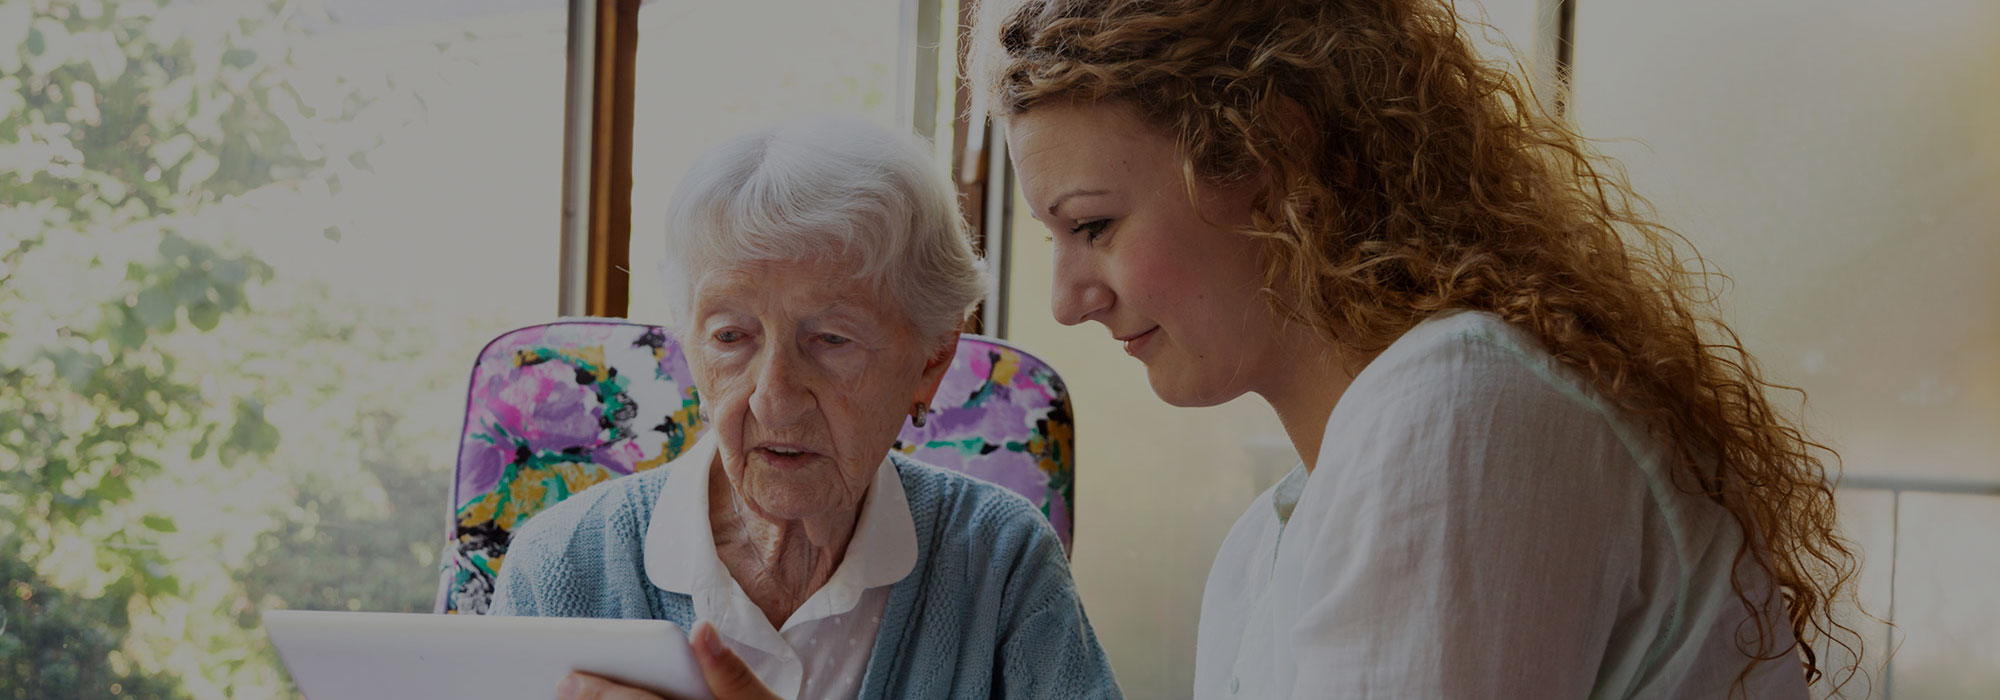 Wellness Check Initiative Update: An Innovative Digital Health Solution to Improve Seniors’ Health Care